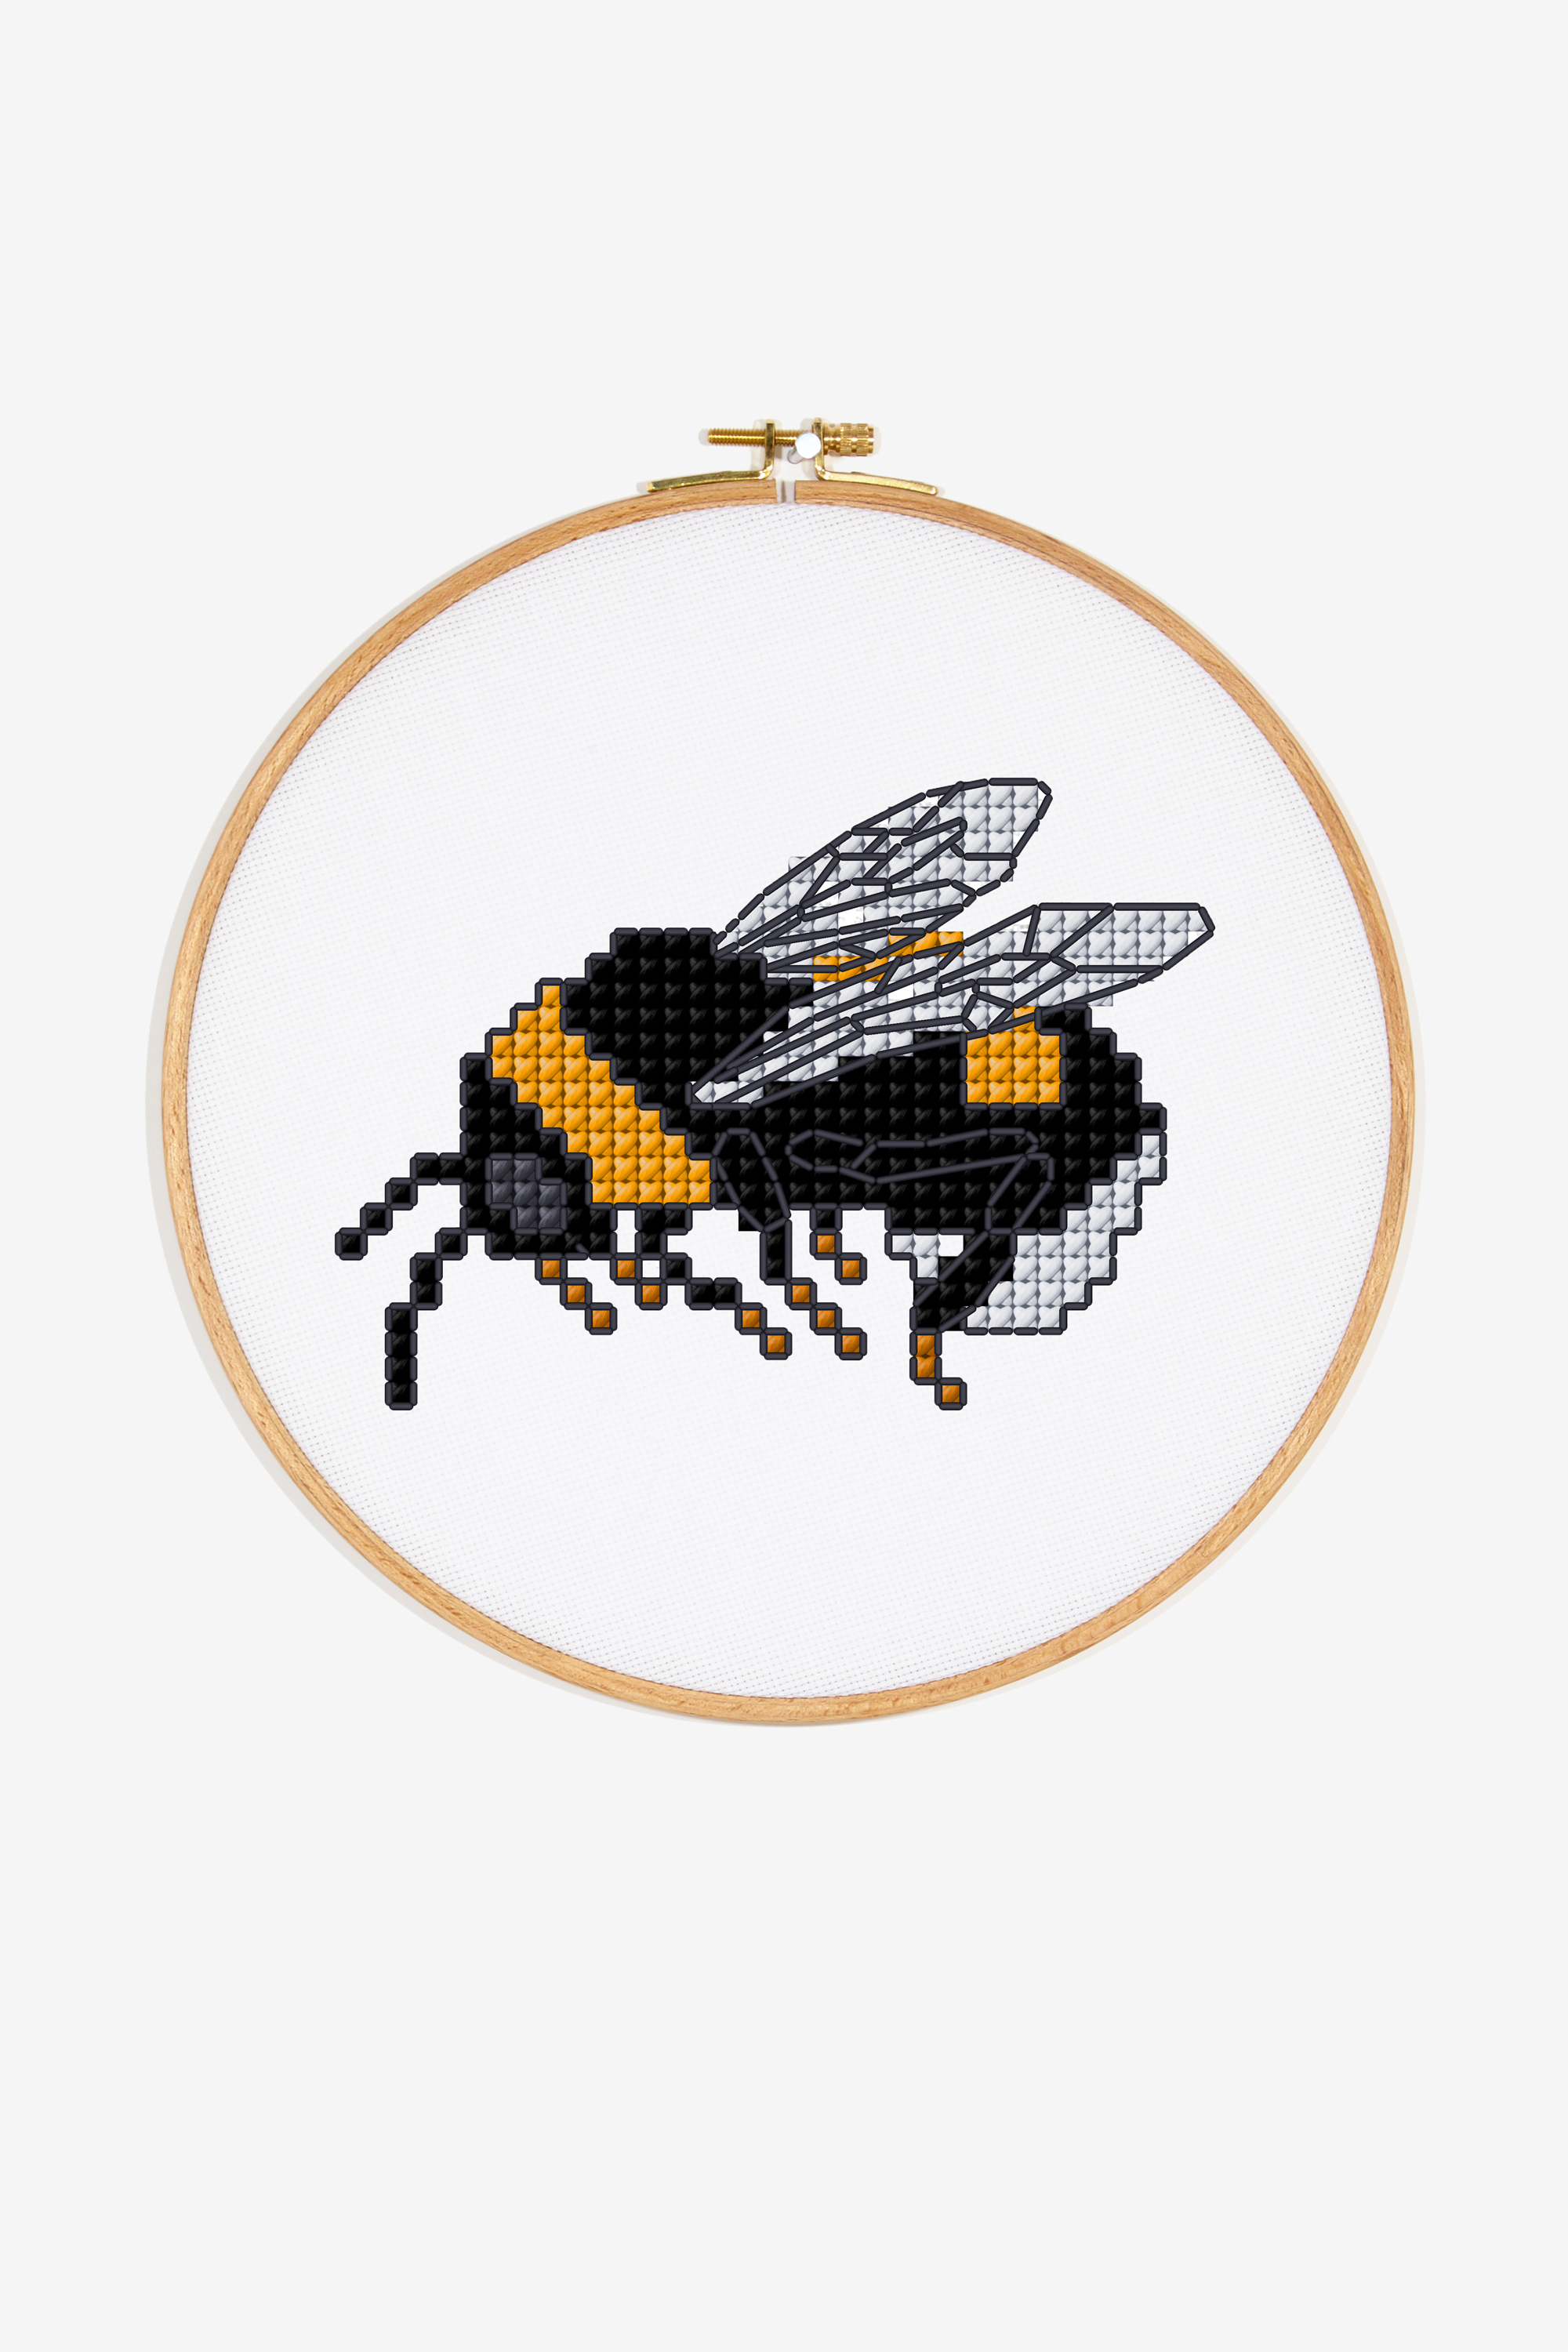 Bumble Bee Embroidery Pattern Bumble Bee Pattern Free Cross Stitch Patterns Dmc